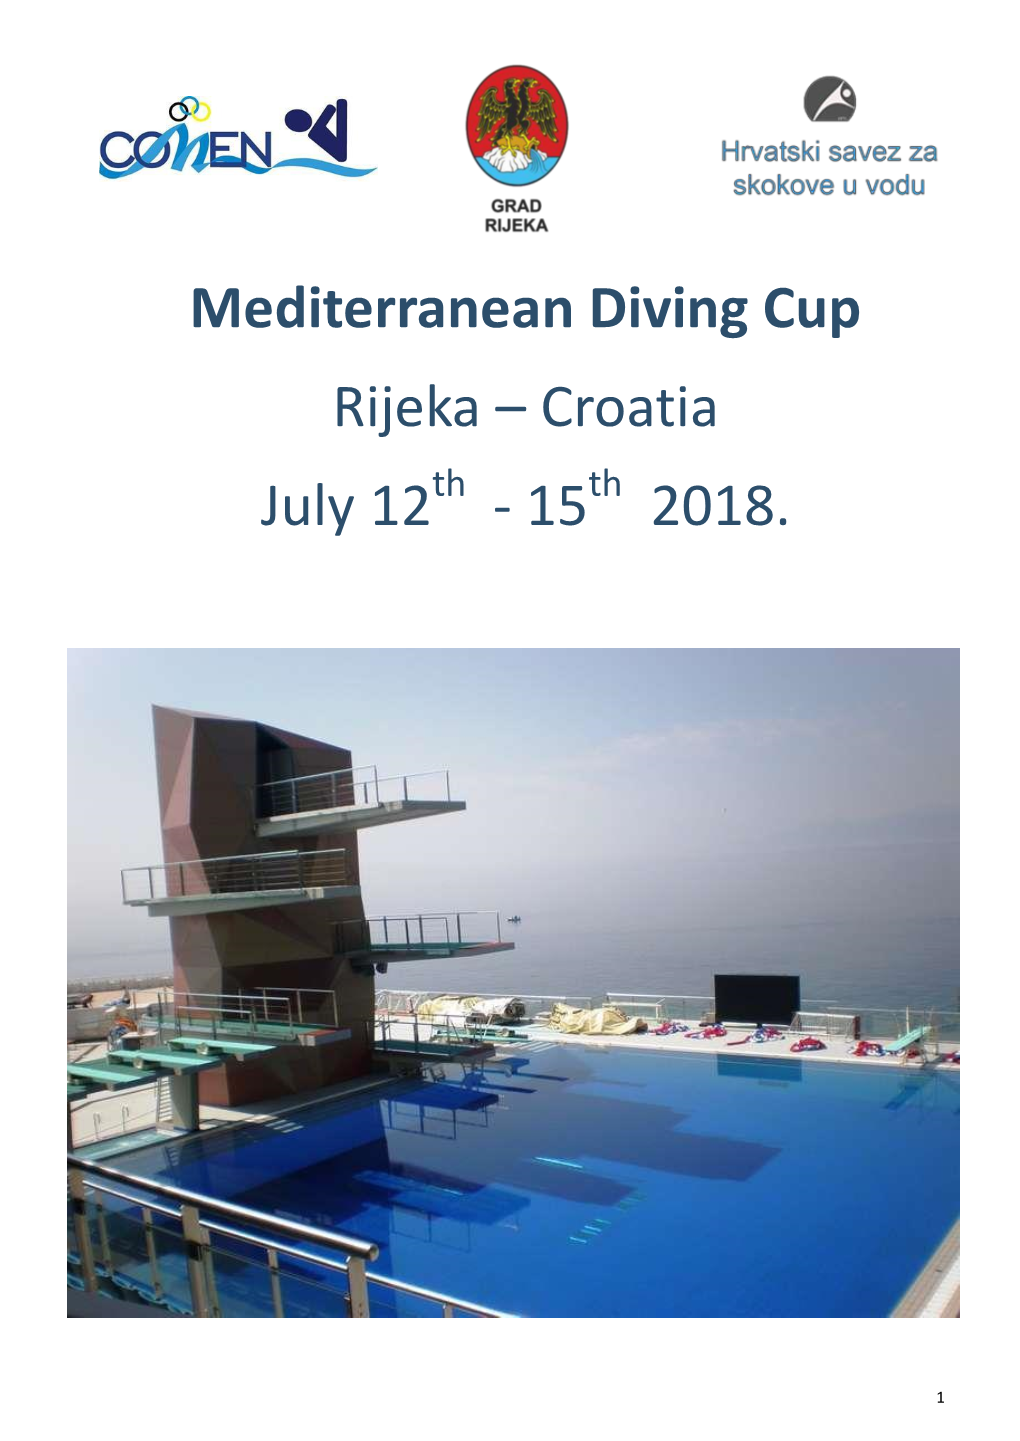 Mediterranean Diving Cup Rijeka